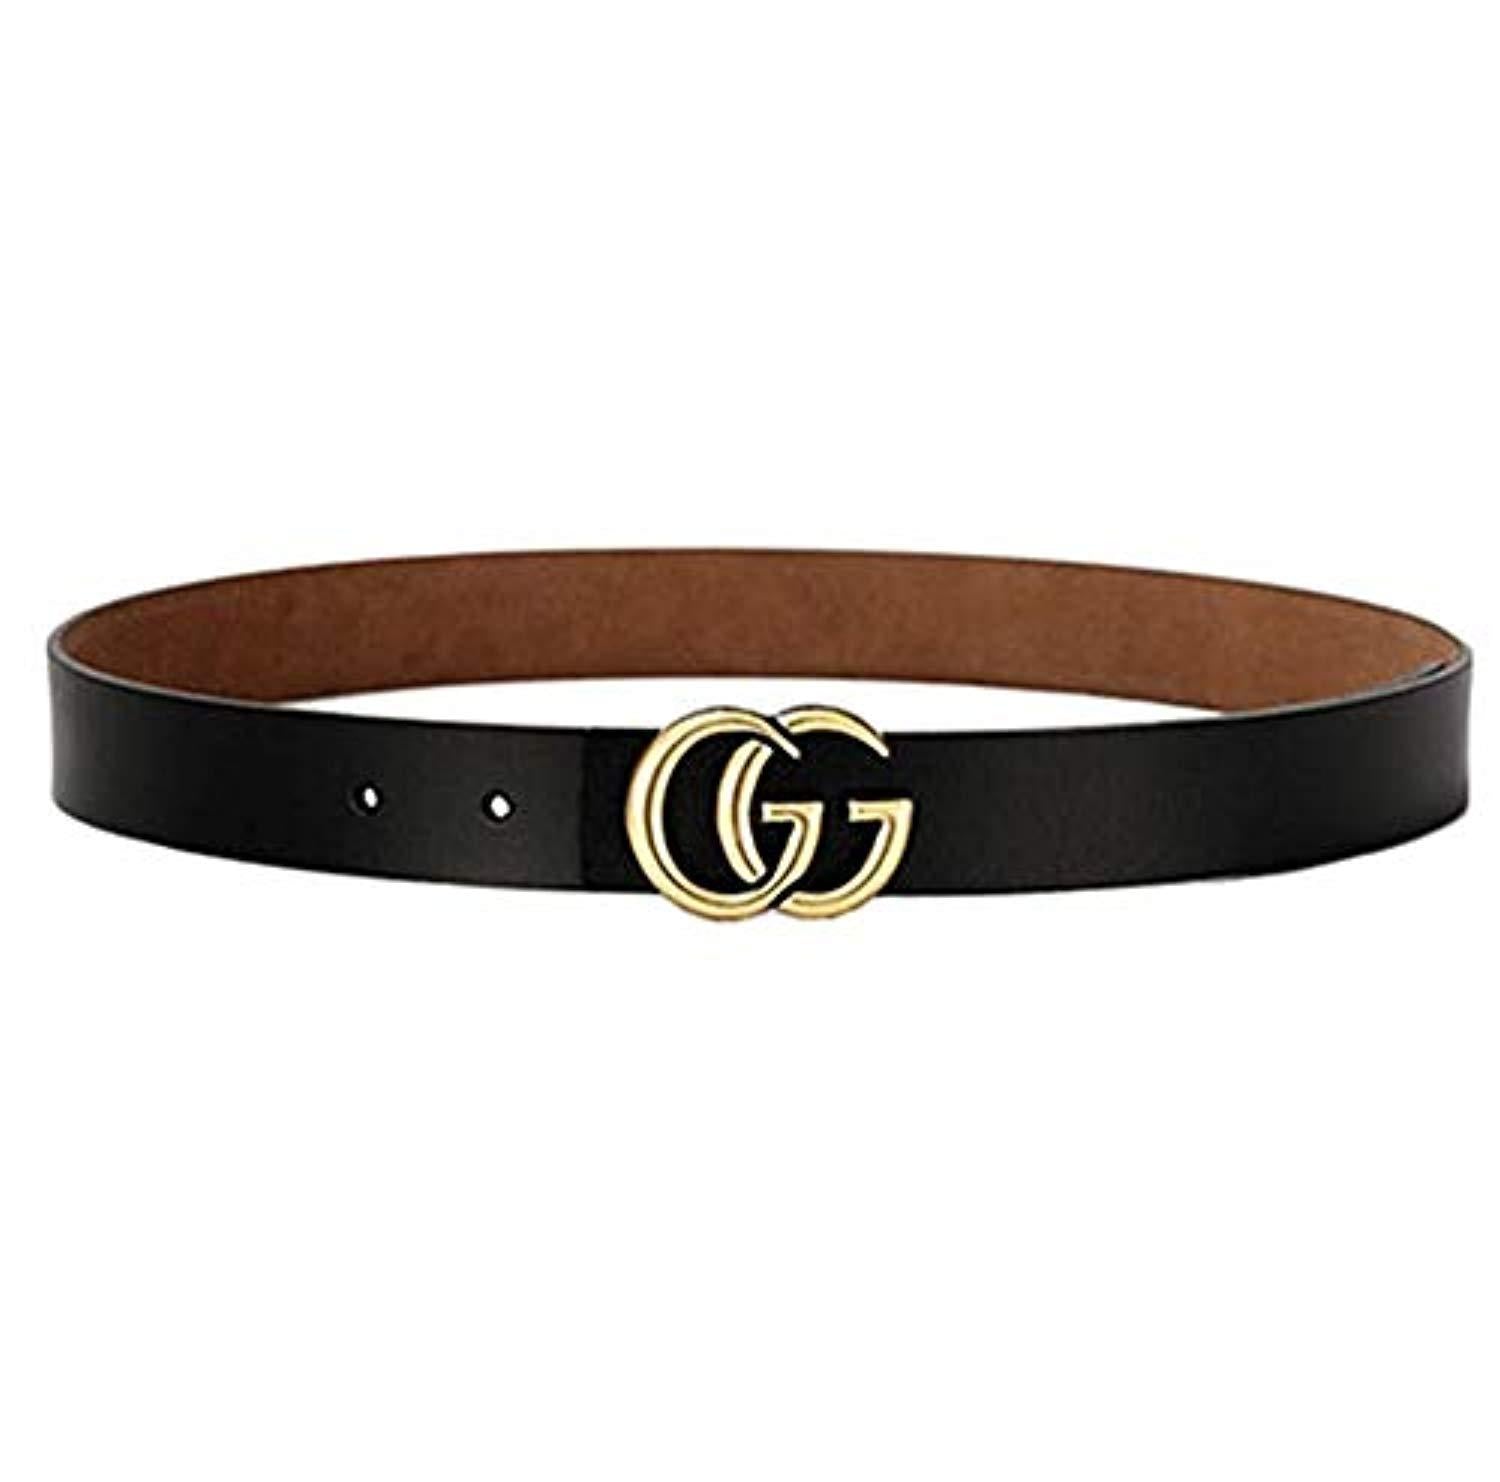 g style belt